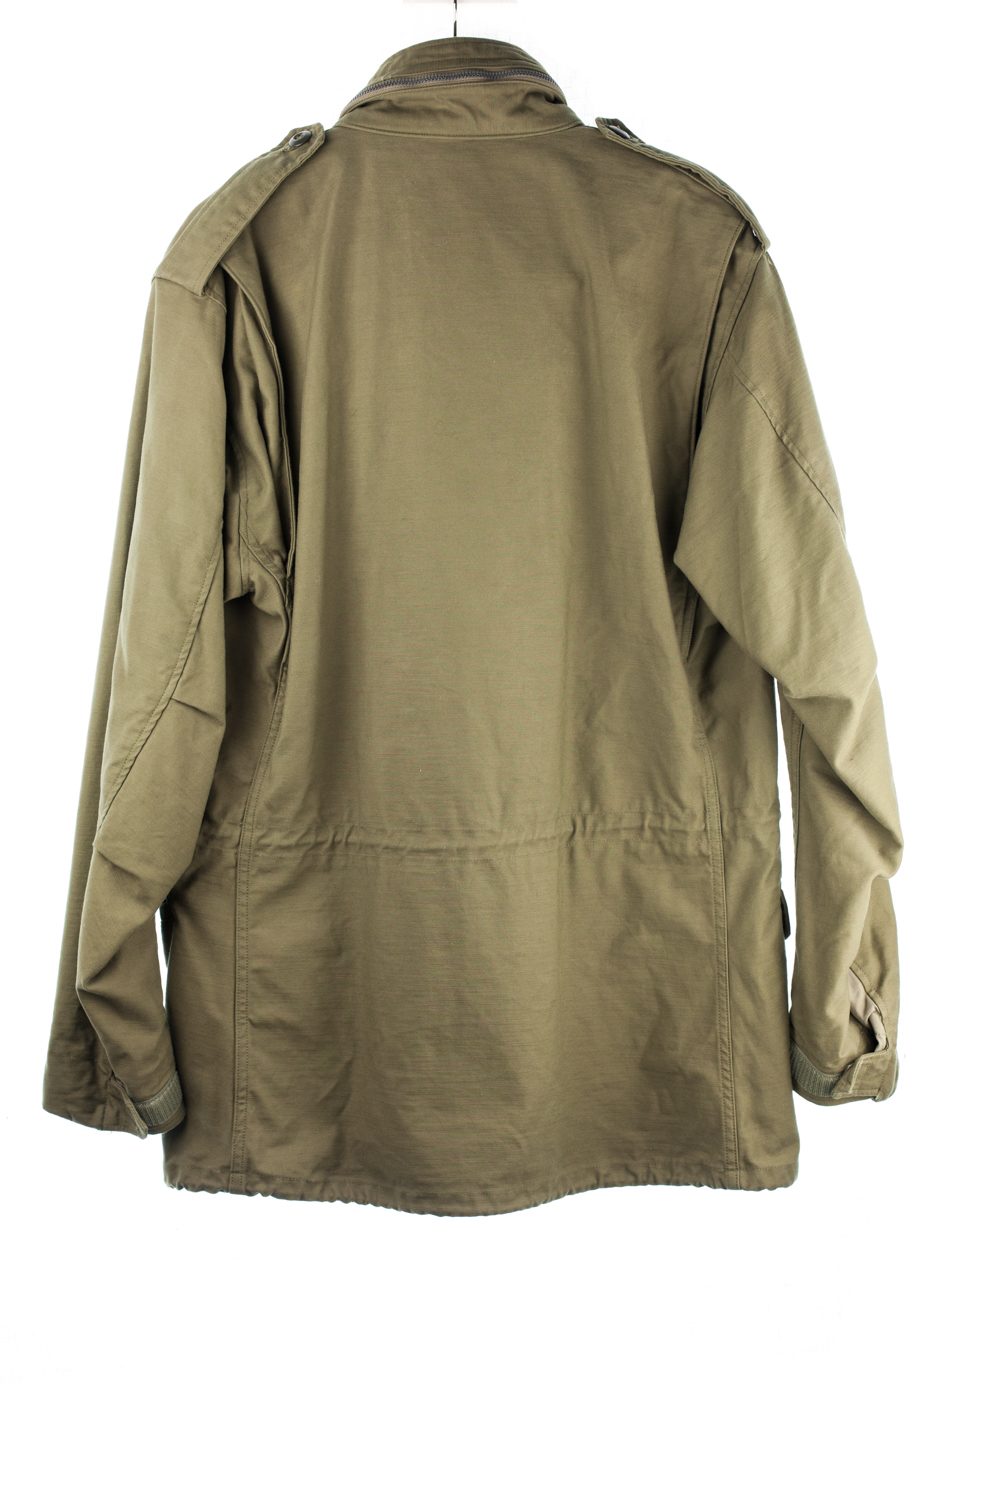 Olive M-65 Field Jacket